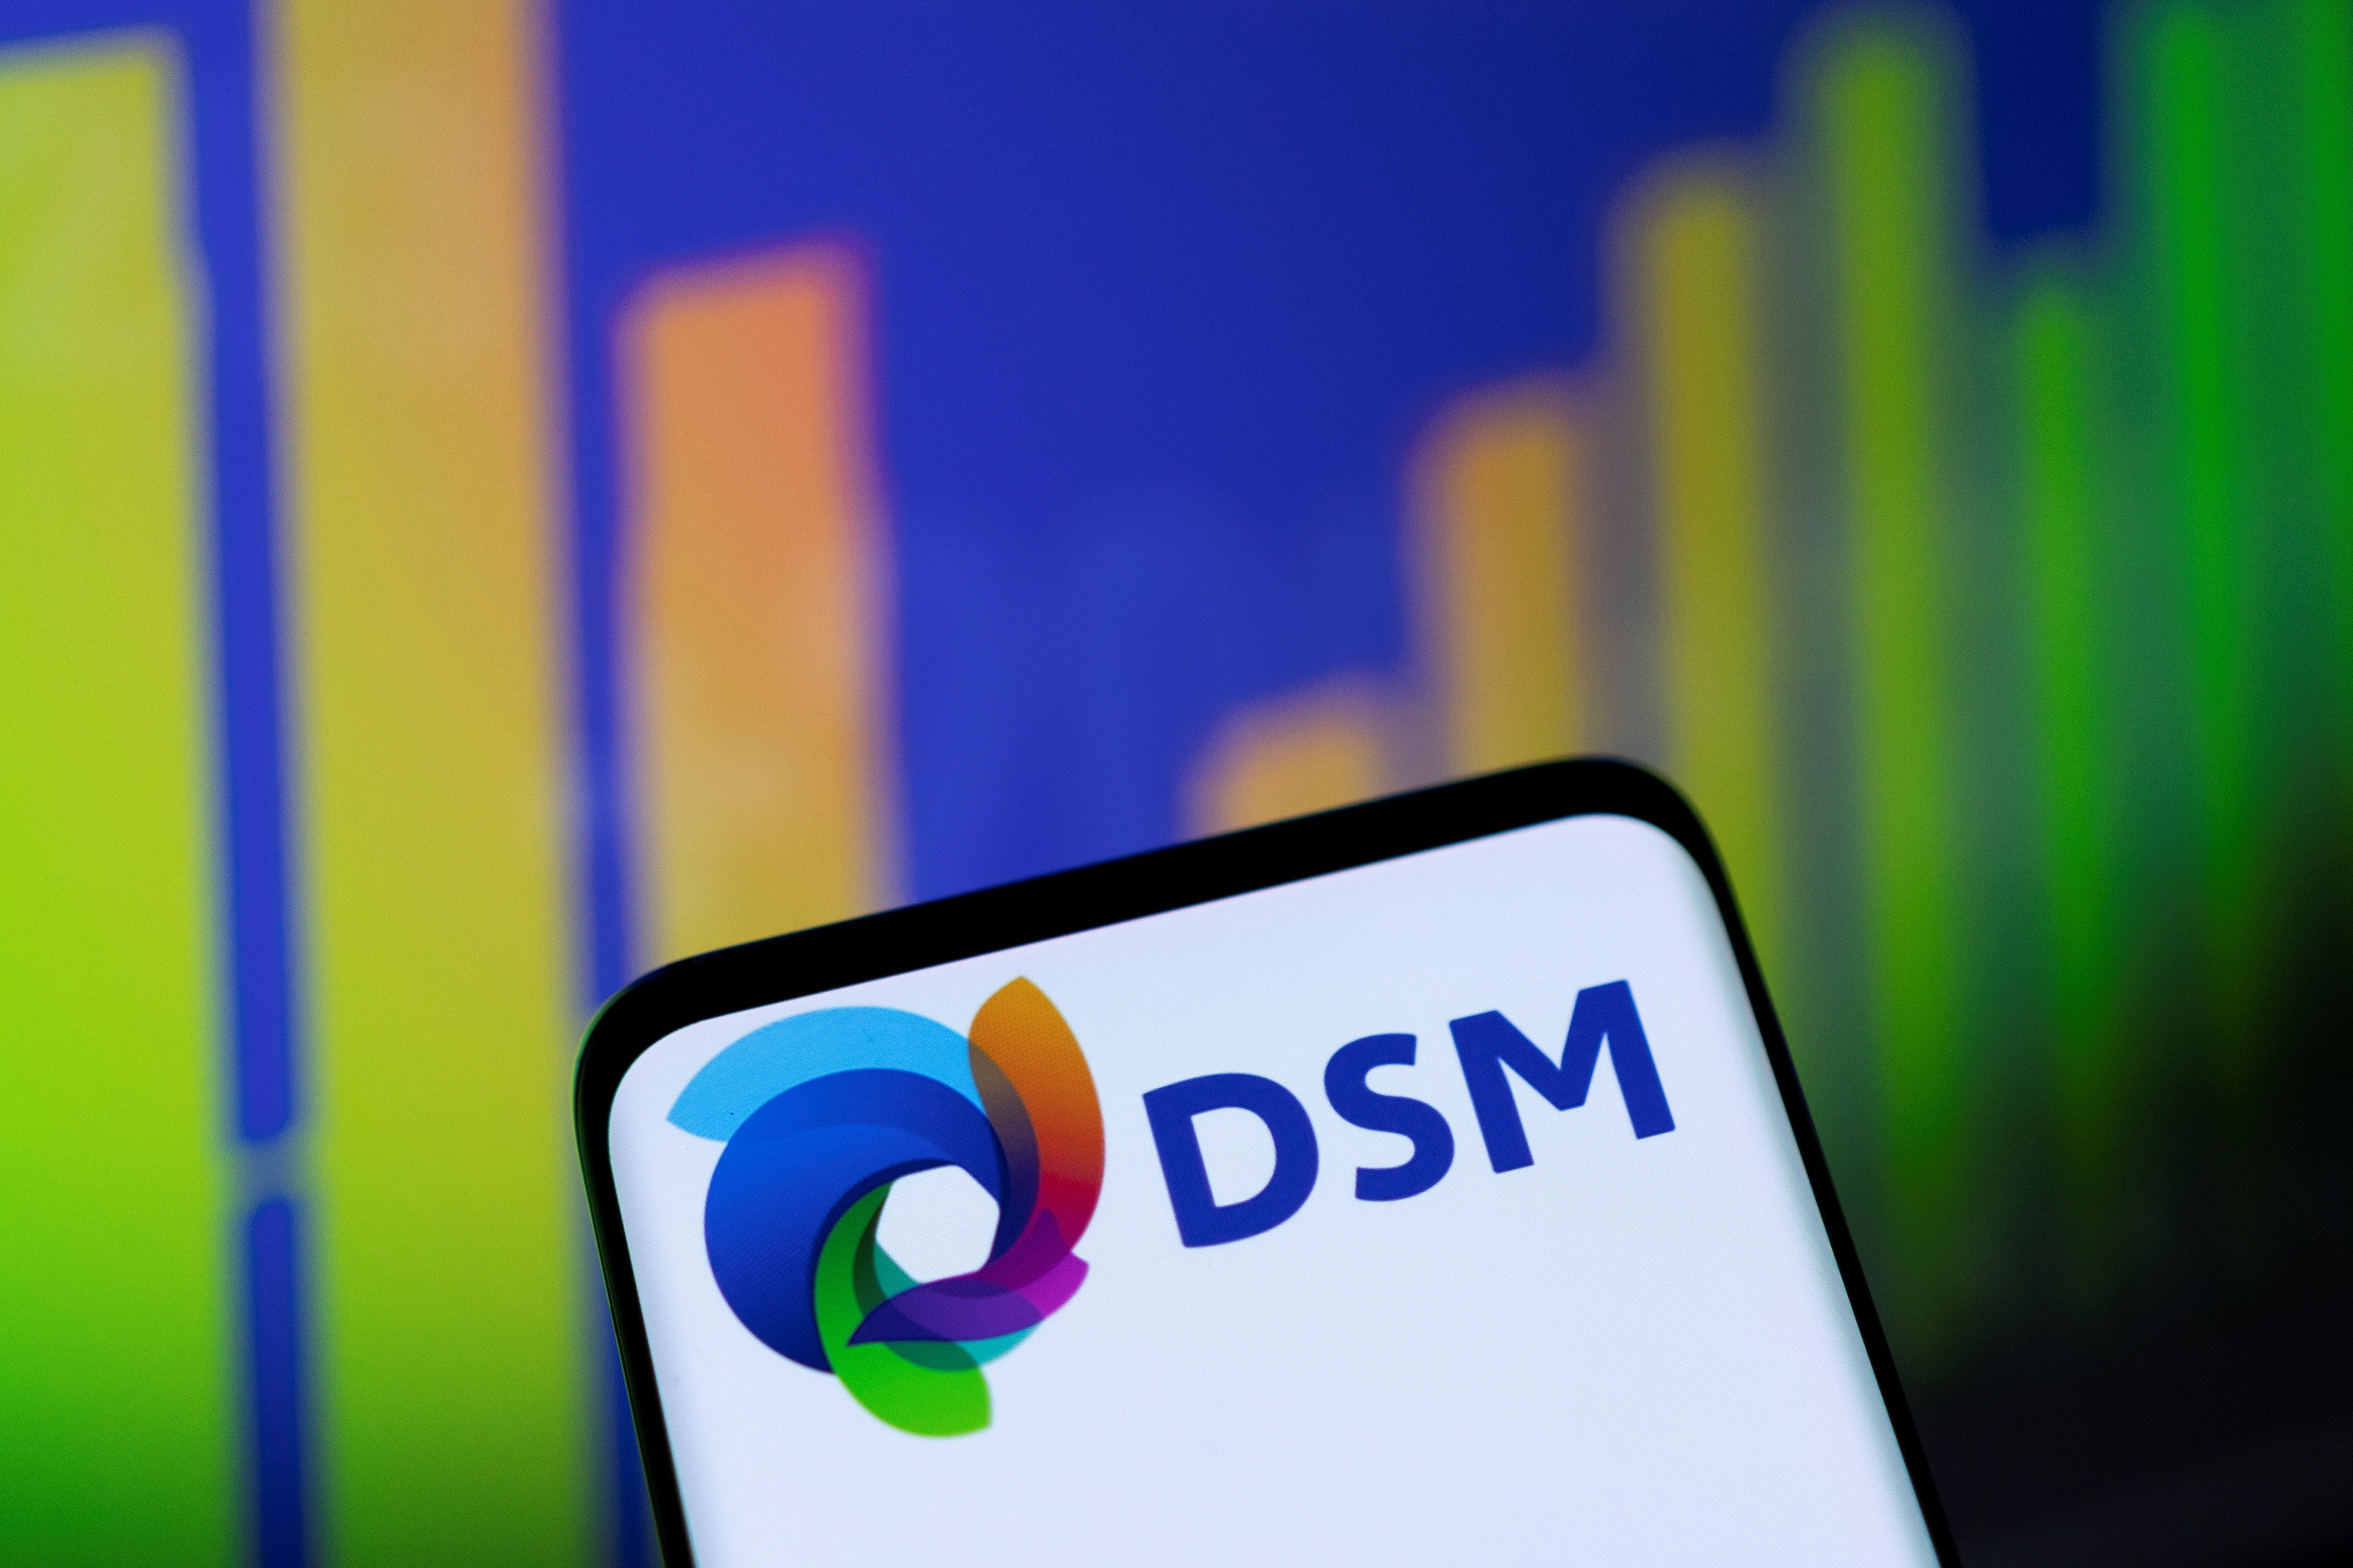 Illustration shows DSM logo and stock graph